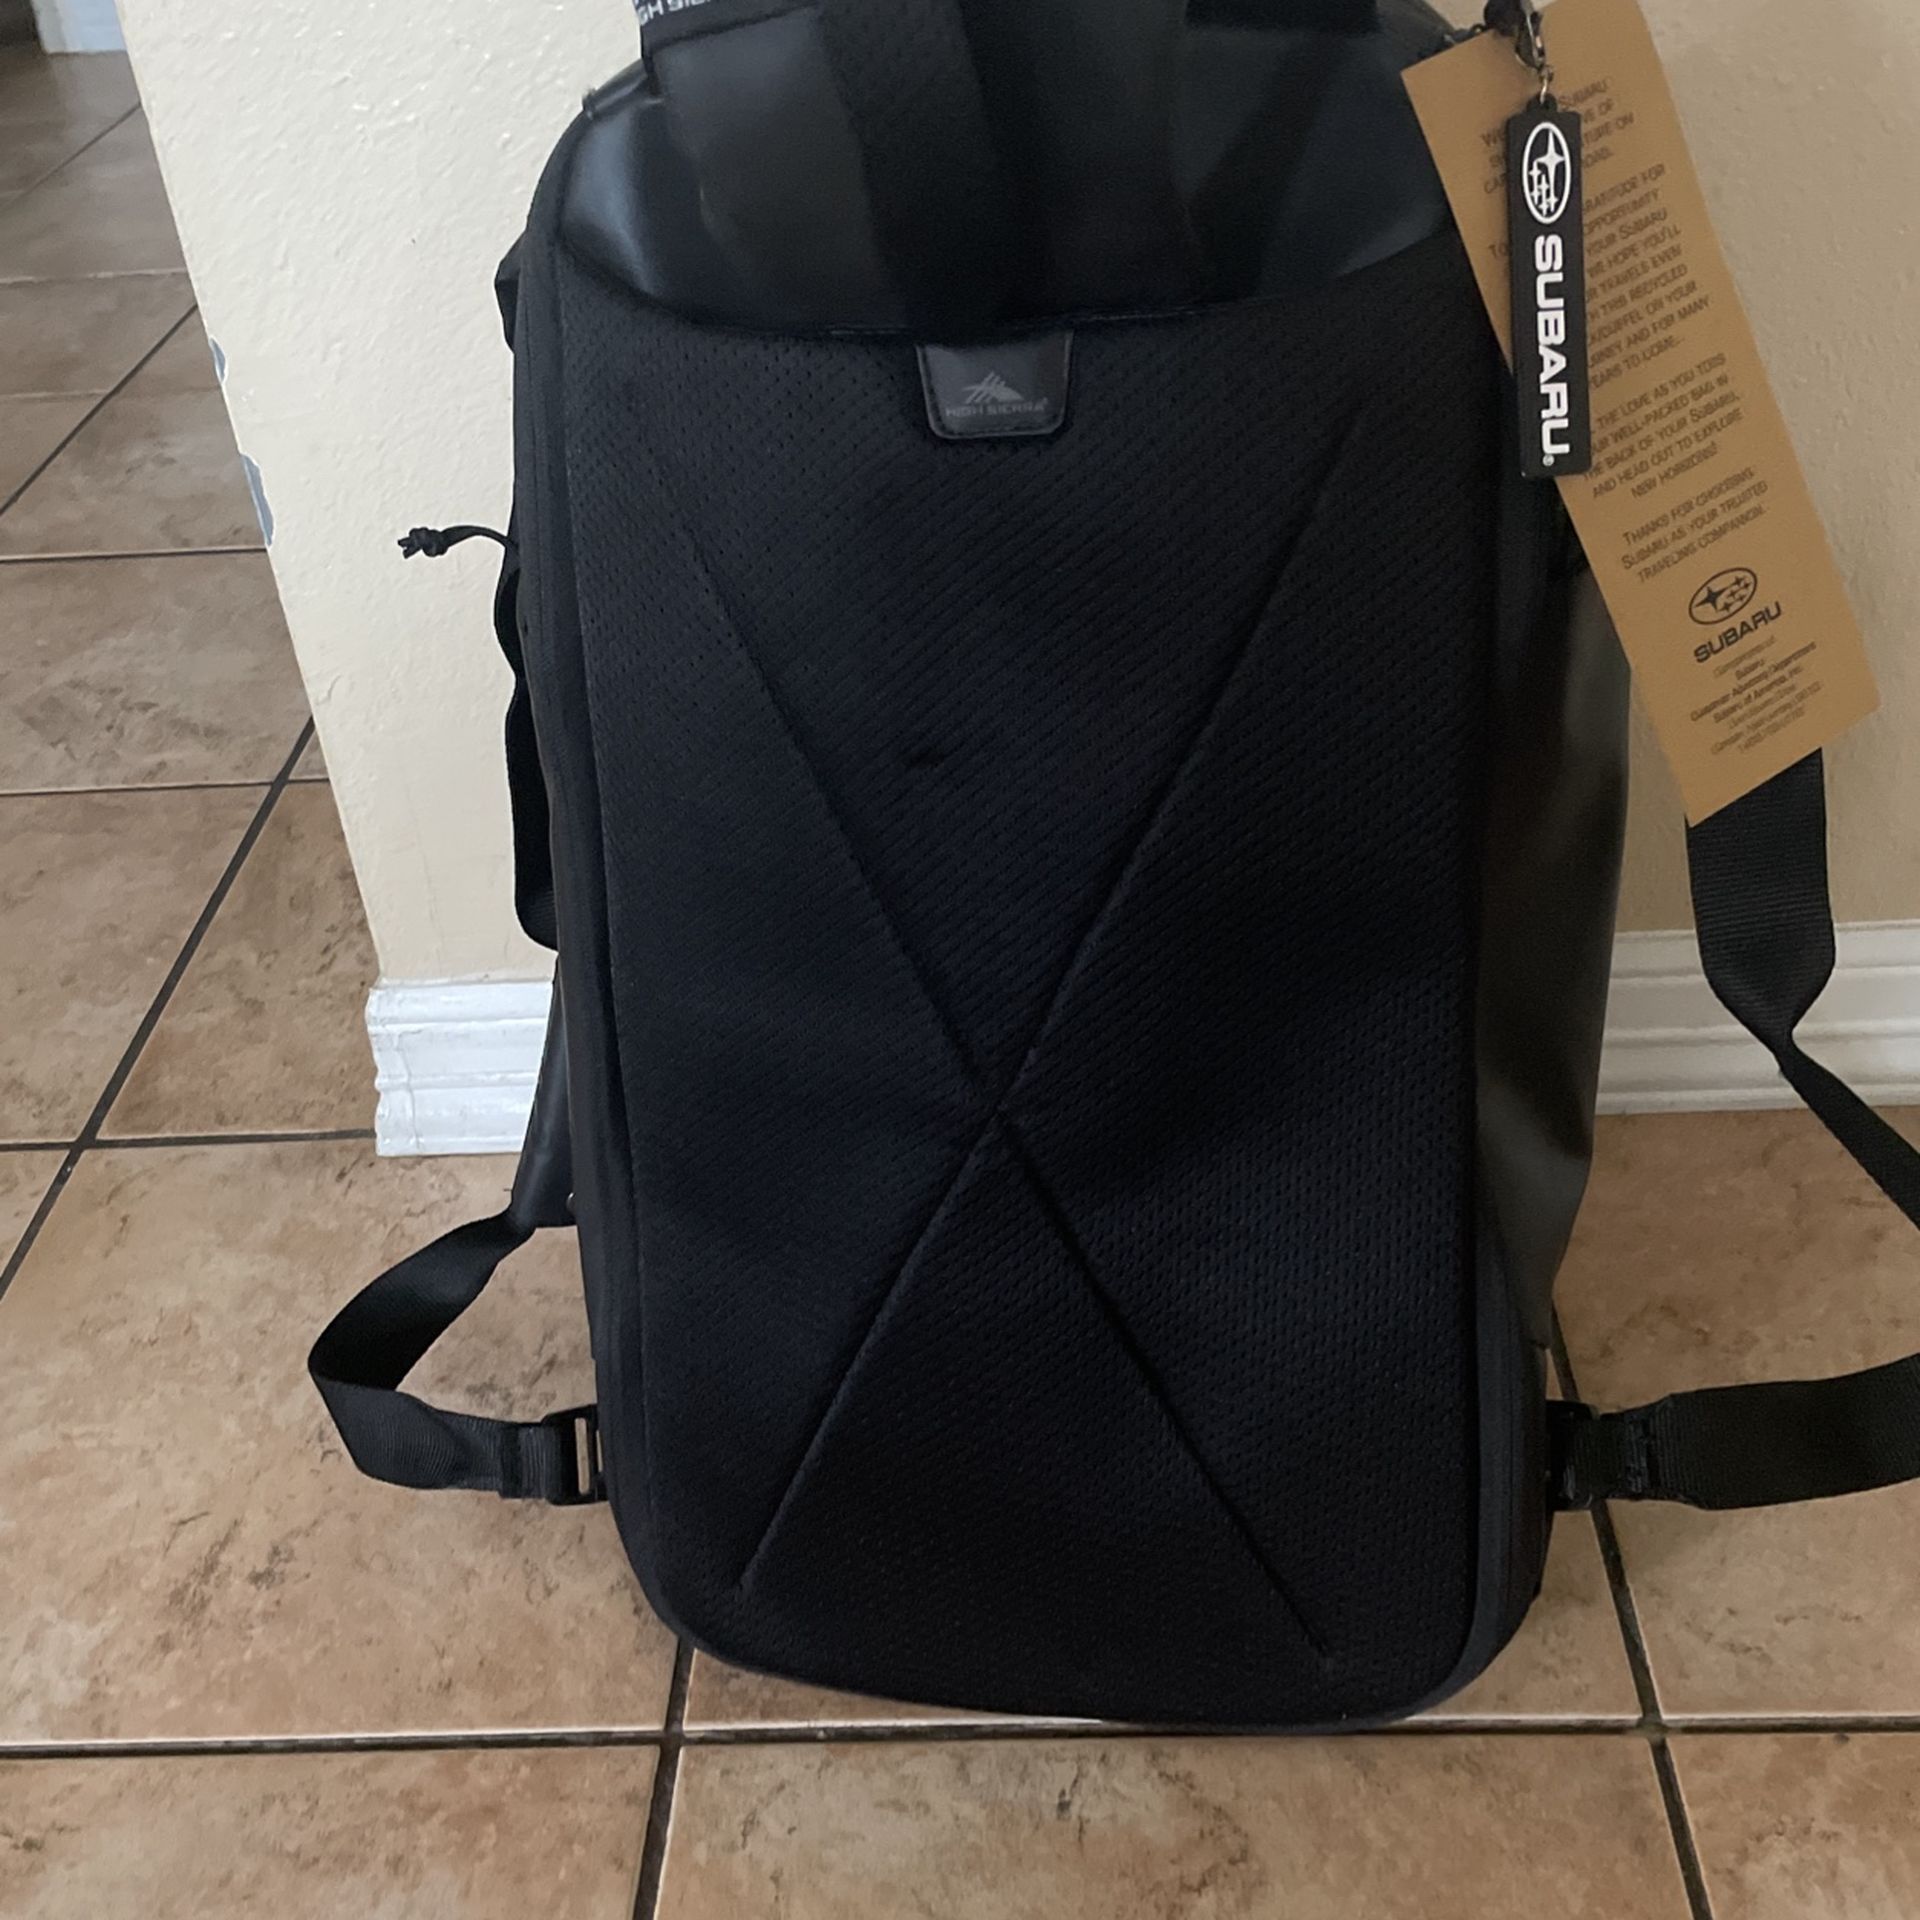 Suburu Backpack/Duffle Bag